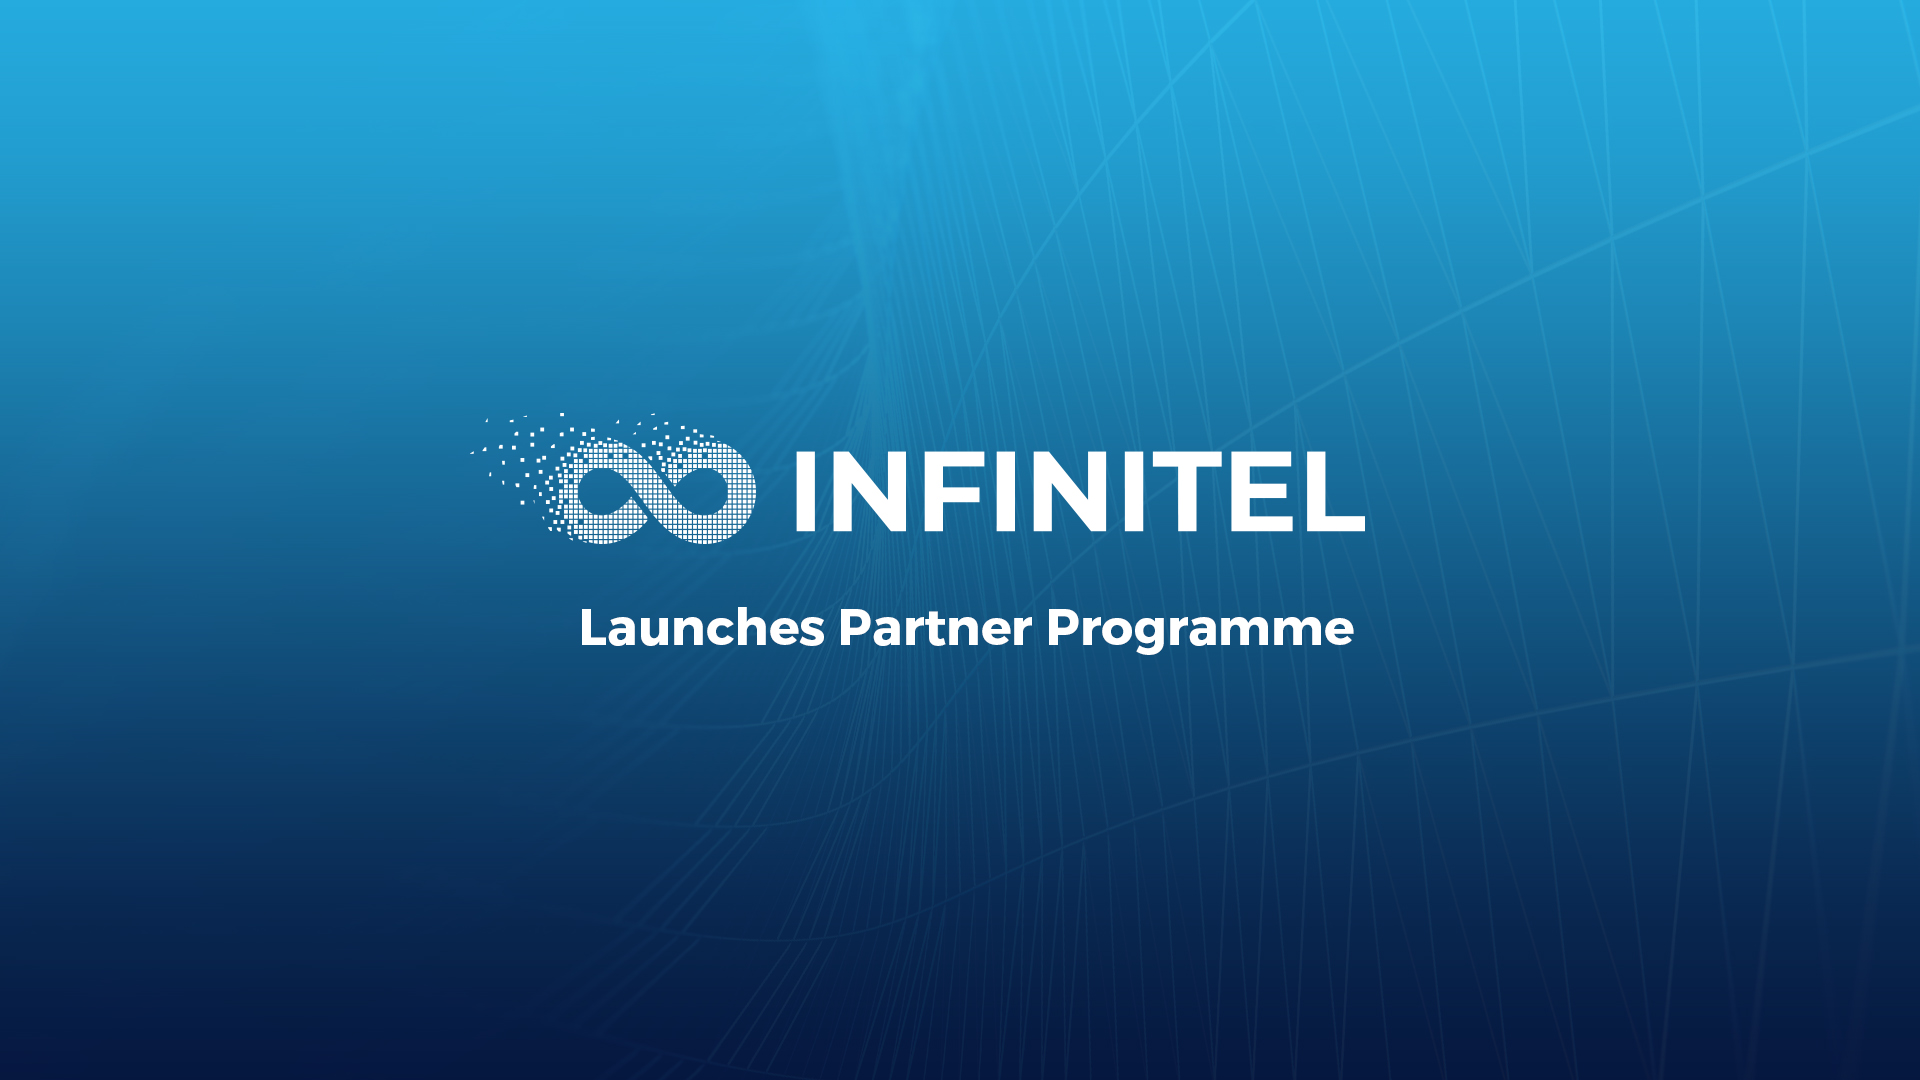 Infinitel Launches Partner Programme